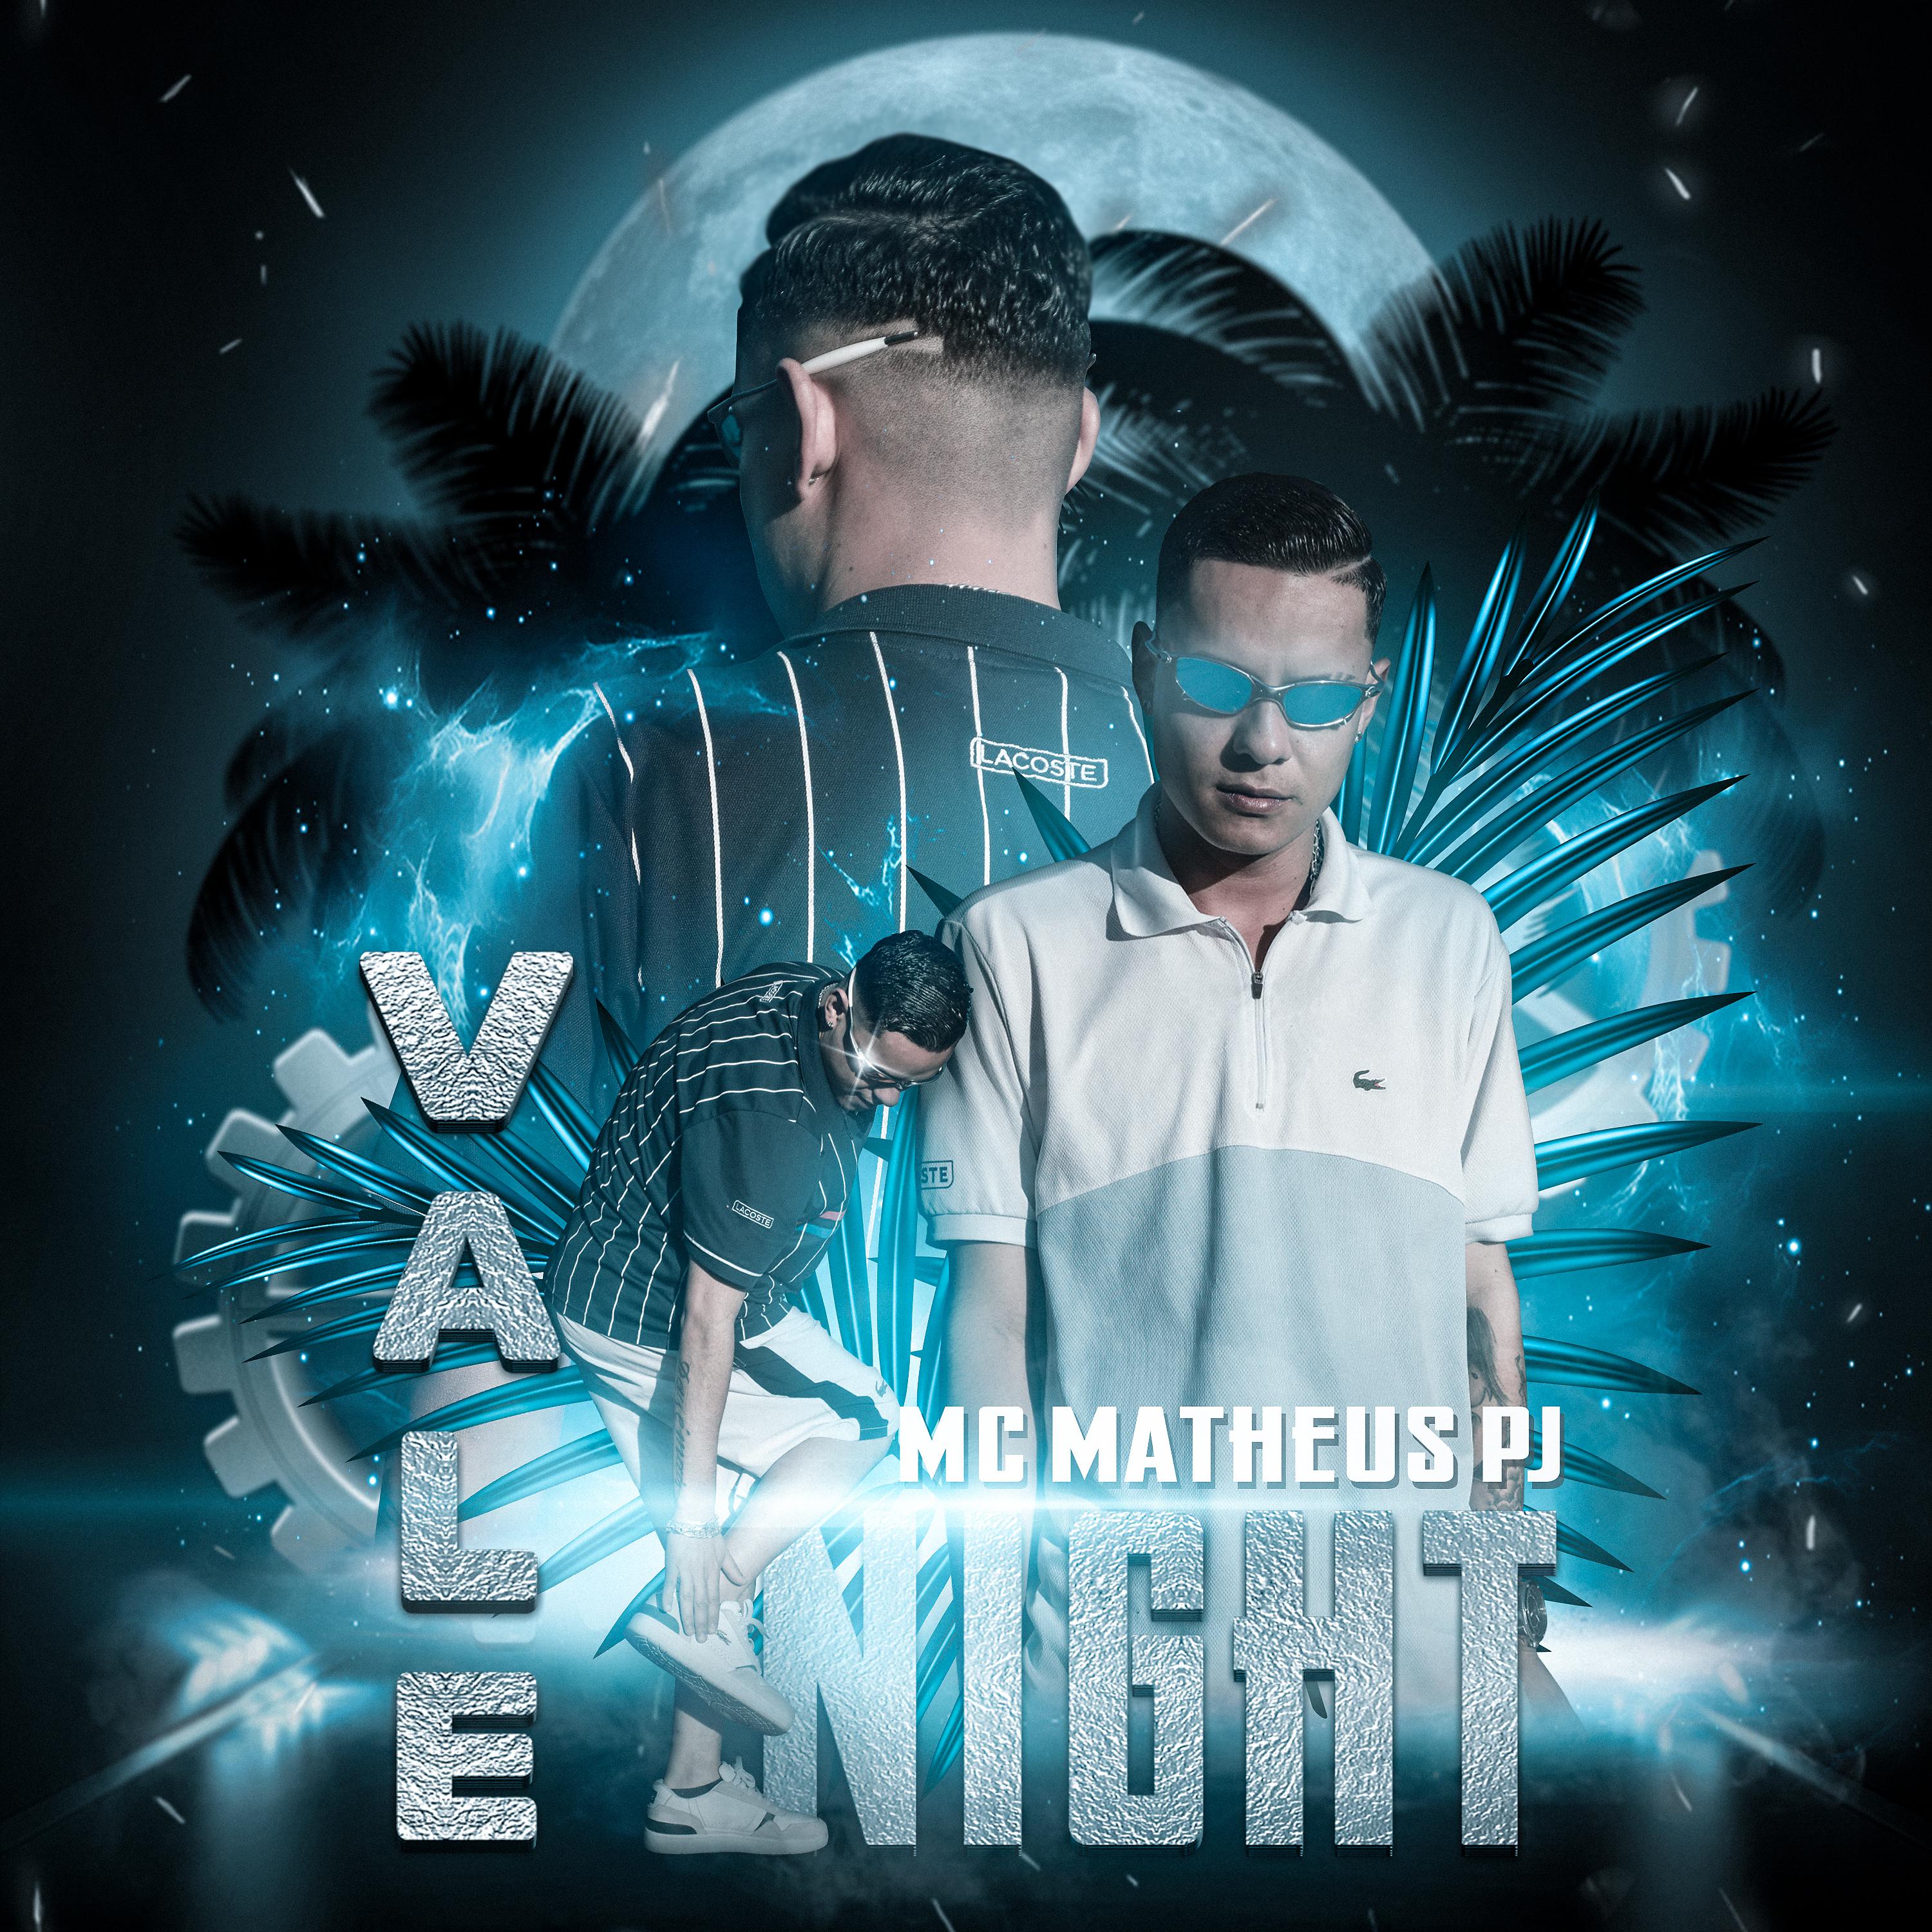 Постер альбома Vale Night